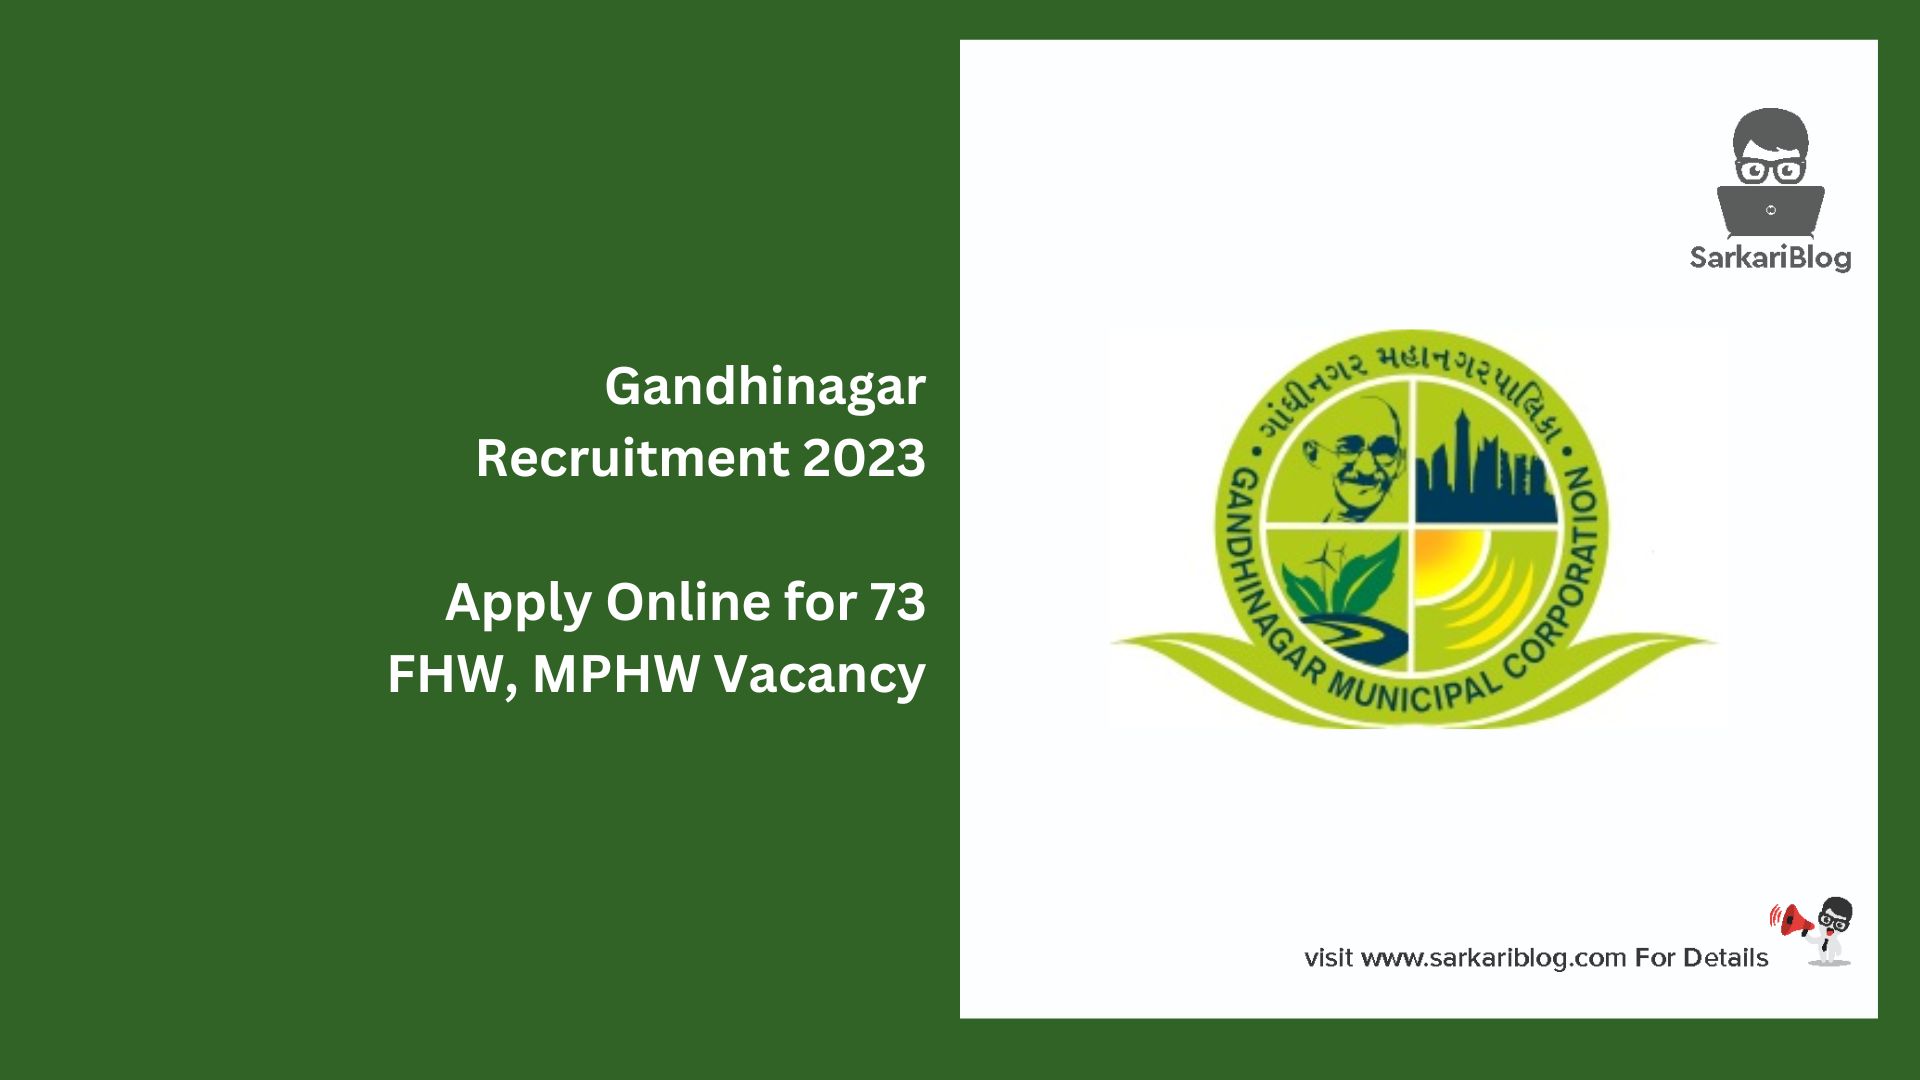 Gandhinagar Recruitment 2023